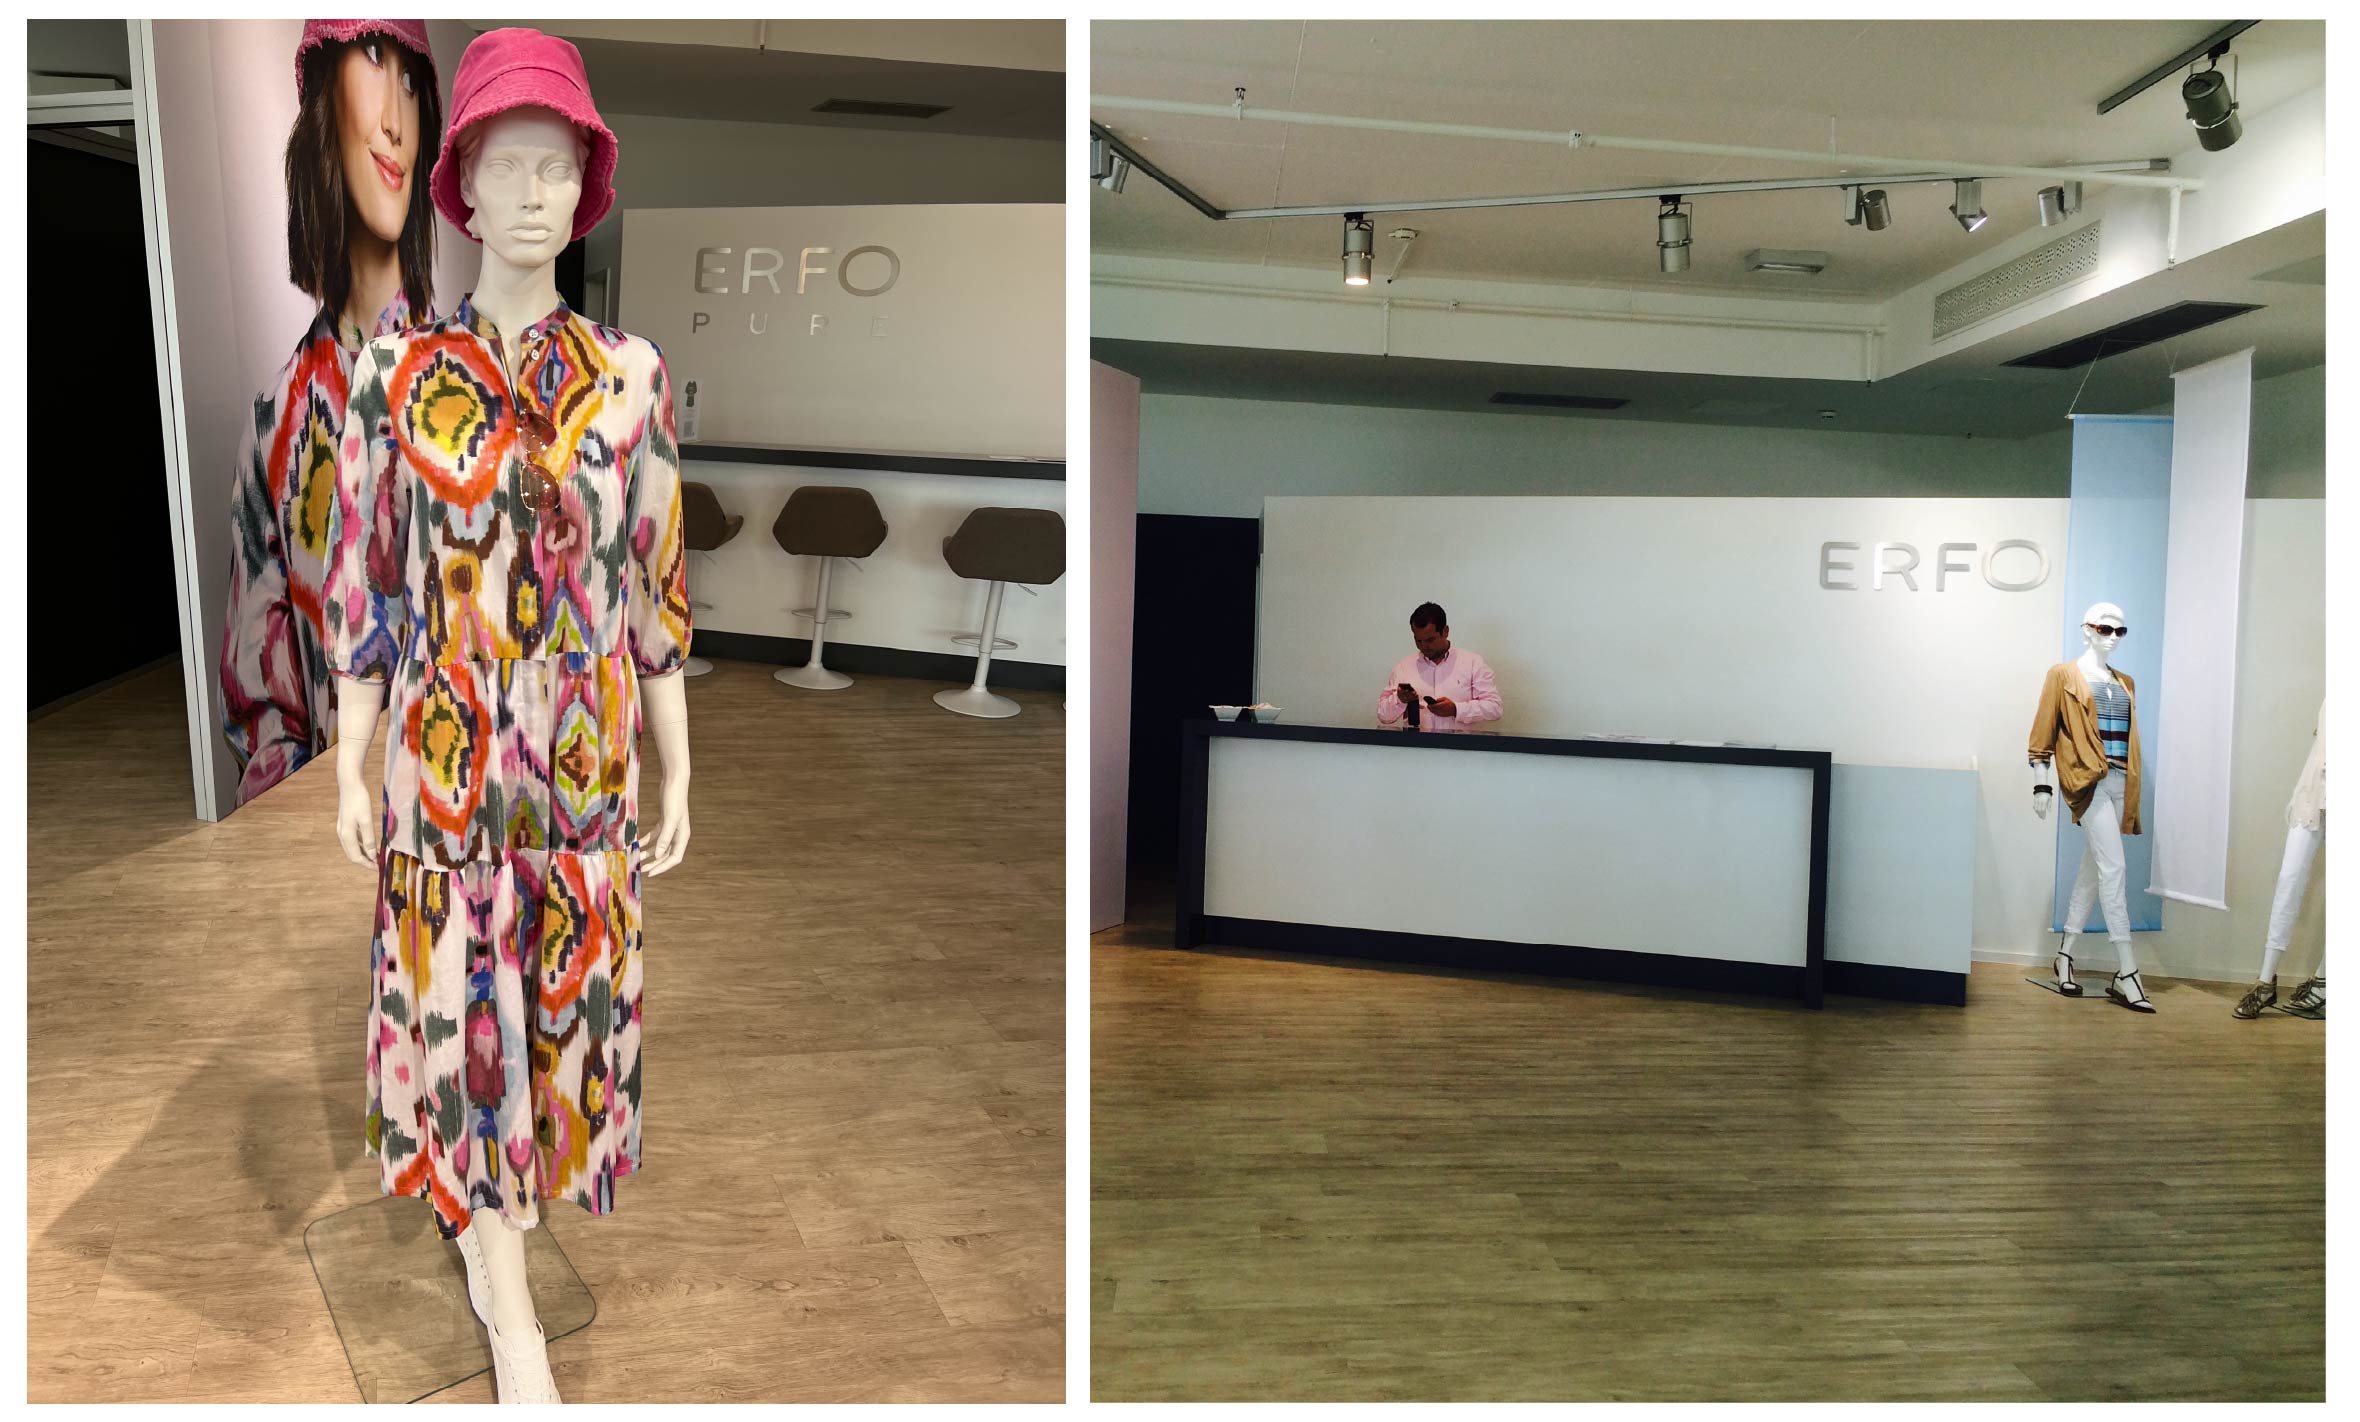 ERFO showroom in Germany showing fashion garments